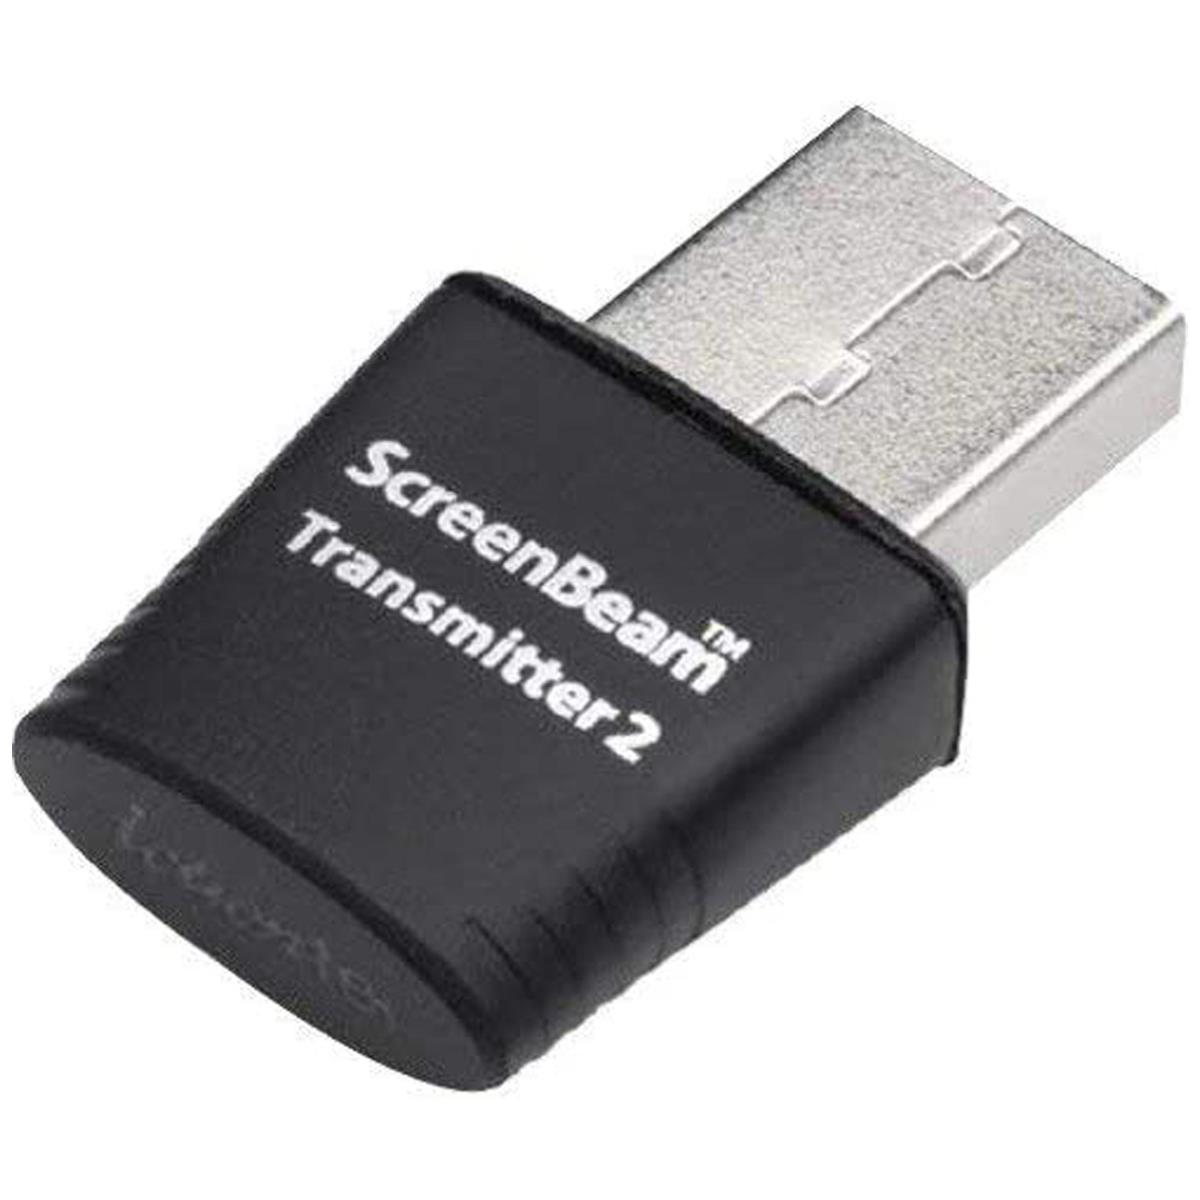 Image of ScreenBeam USB Transmitter 2 Adapter for Windows 7/8